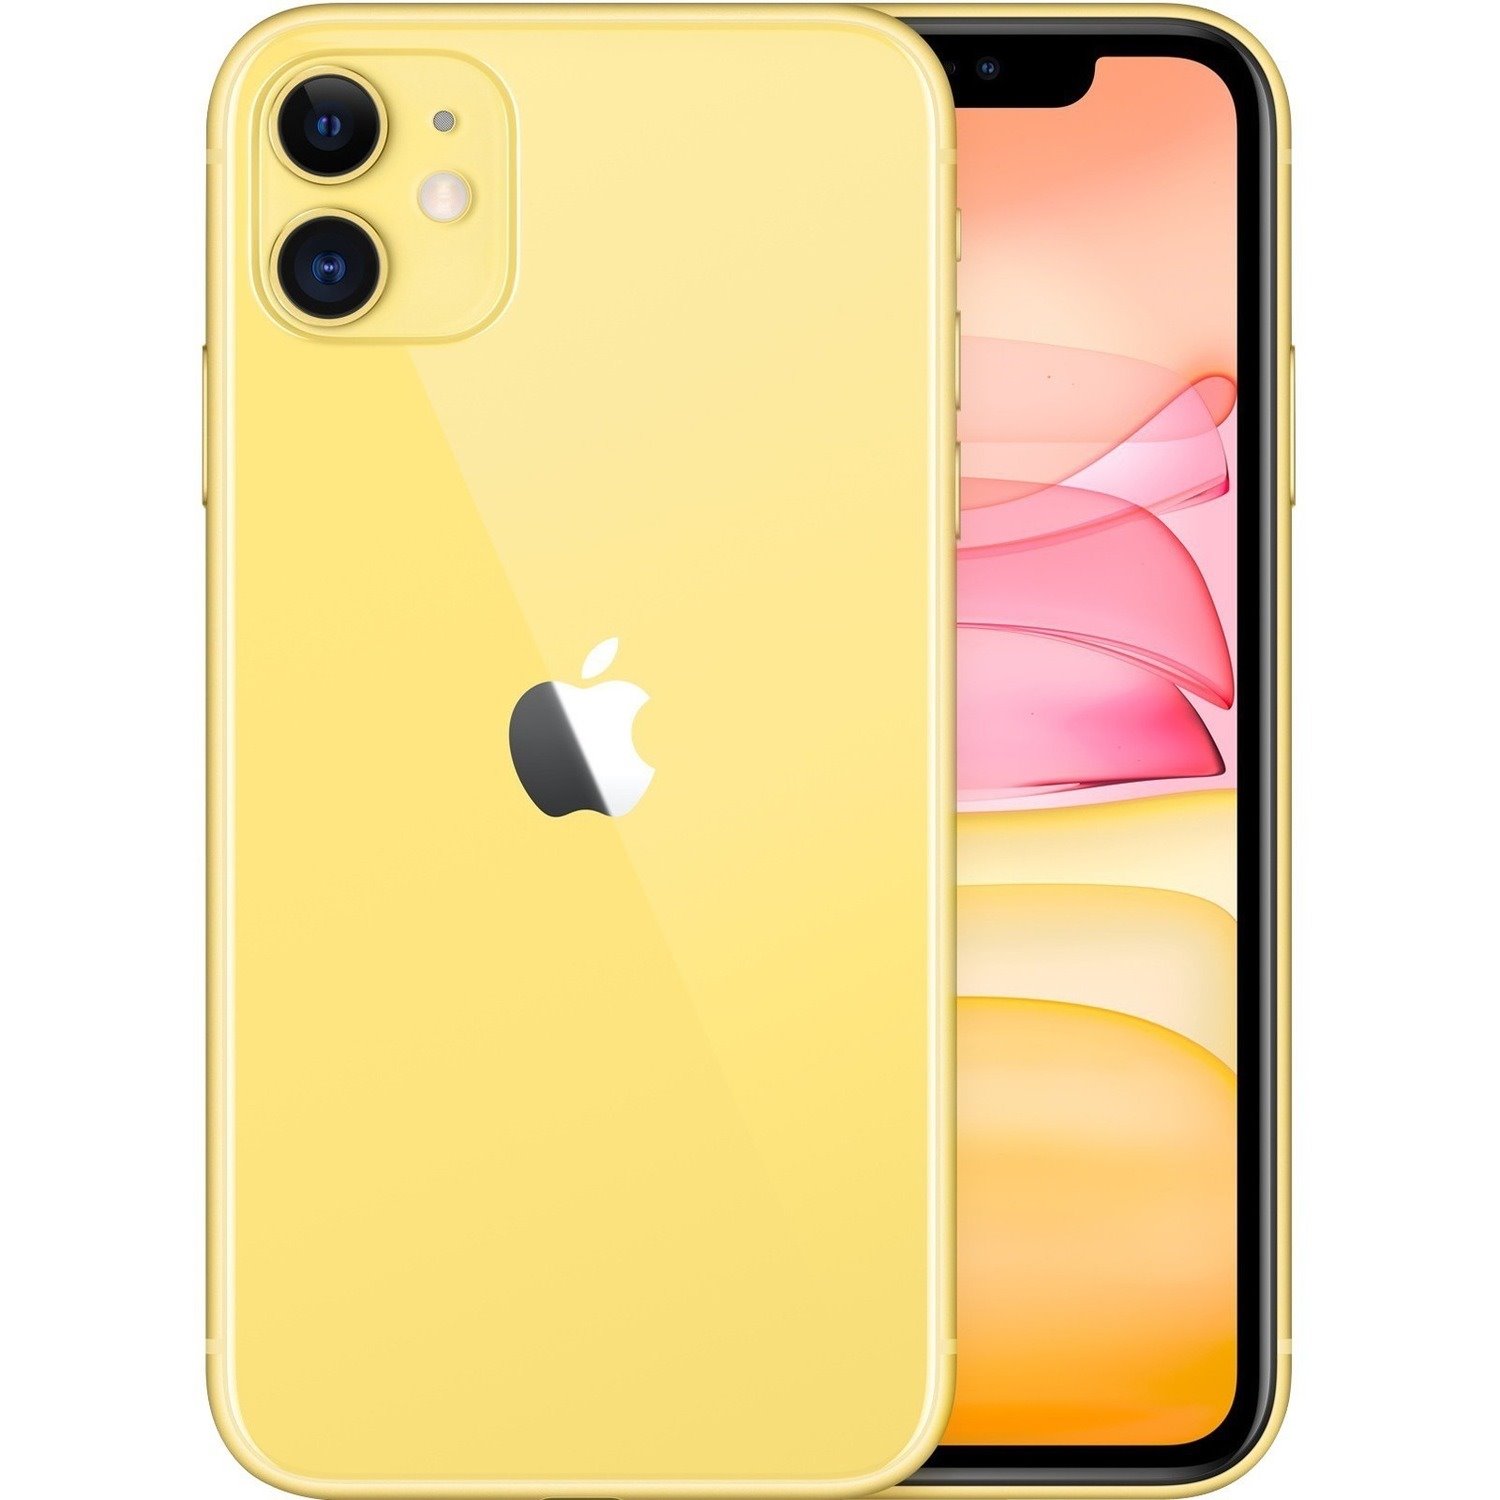 Apple iPhone 11 128 GB Smartphone - 15.5 cm (6.1") LCD 1792 x 828 - Dual-core (2 Core) 2.65 GHz Quad-core (4 Core) 1.80 GHz - 4 GB RAM - iOS 14 - 4G - Yellow